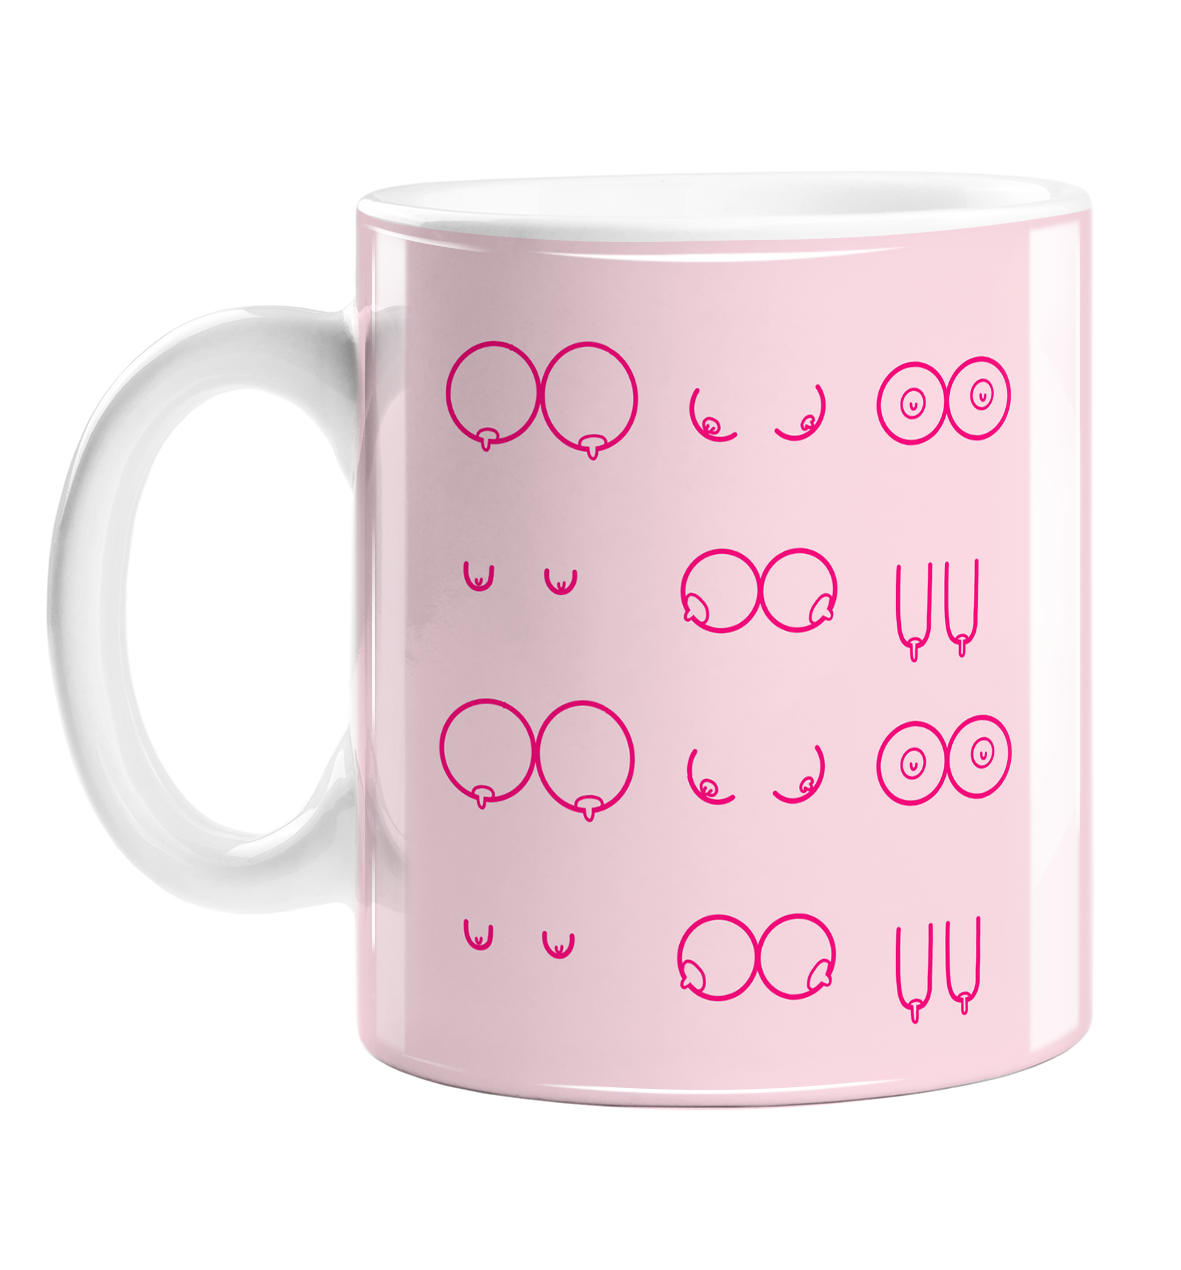 https://cdn.shopify.com/s/files/1/0264/3388/0149/products/boobs-illustration-pink-mug.png?v=1607443466